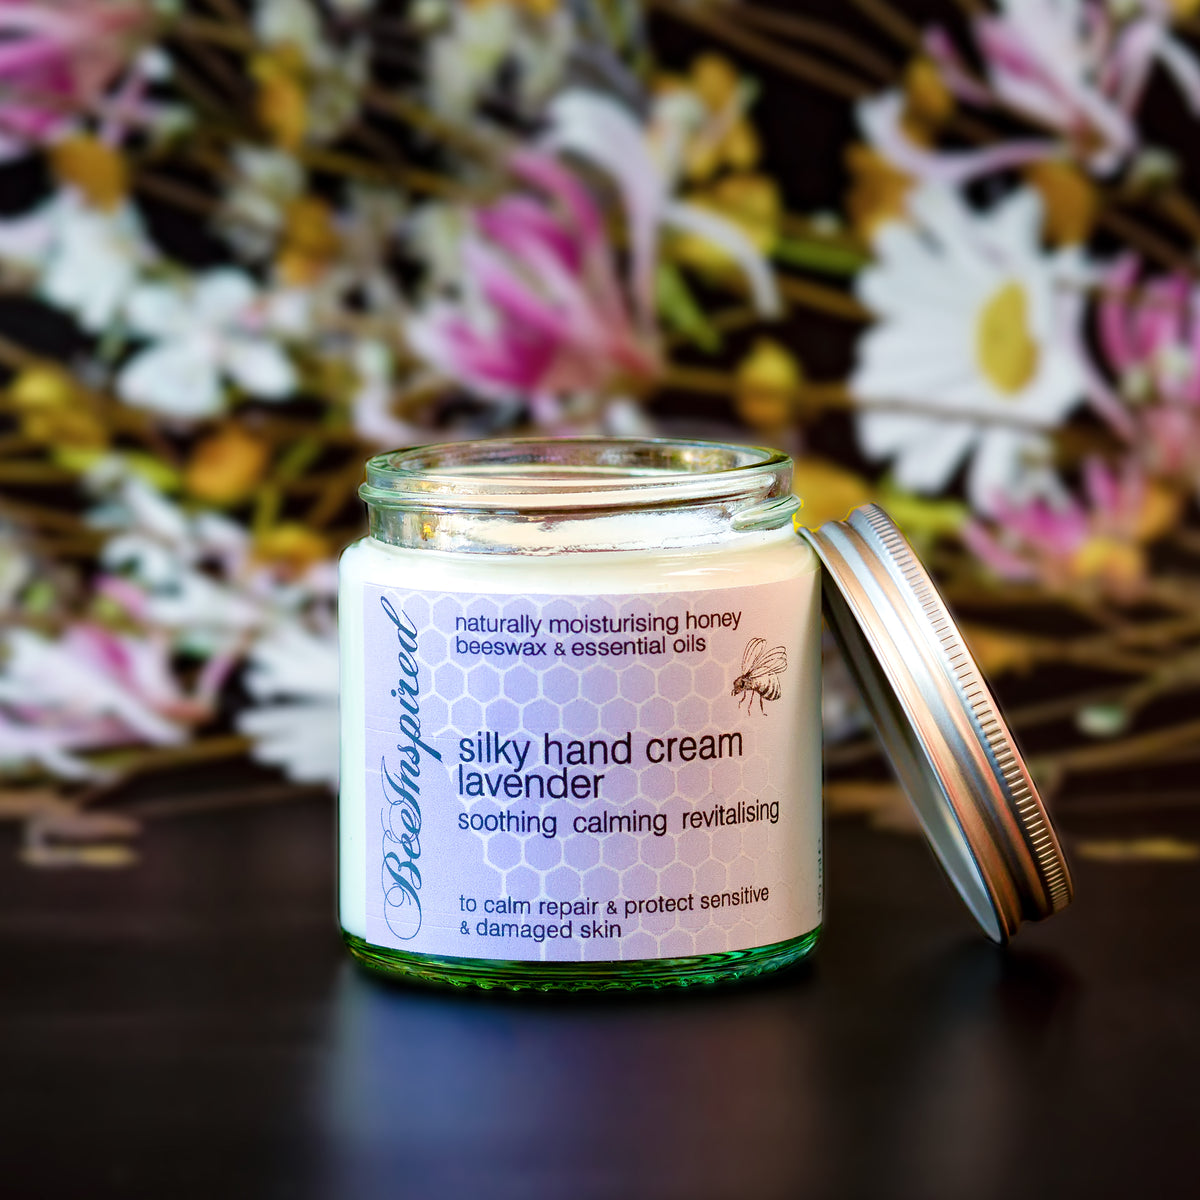 silky hand cream - lavender - soothing calming + revitalising